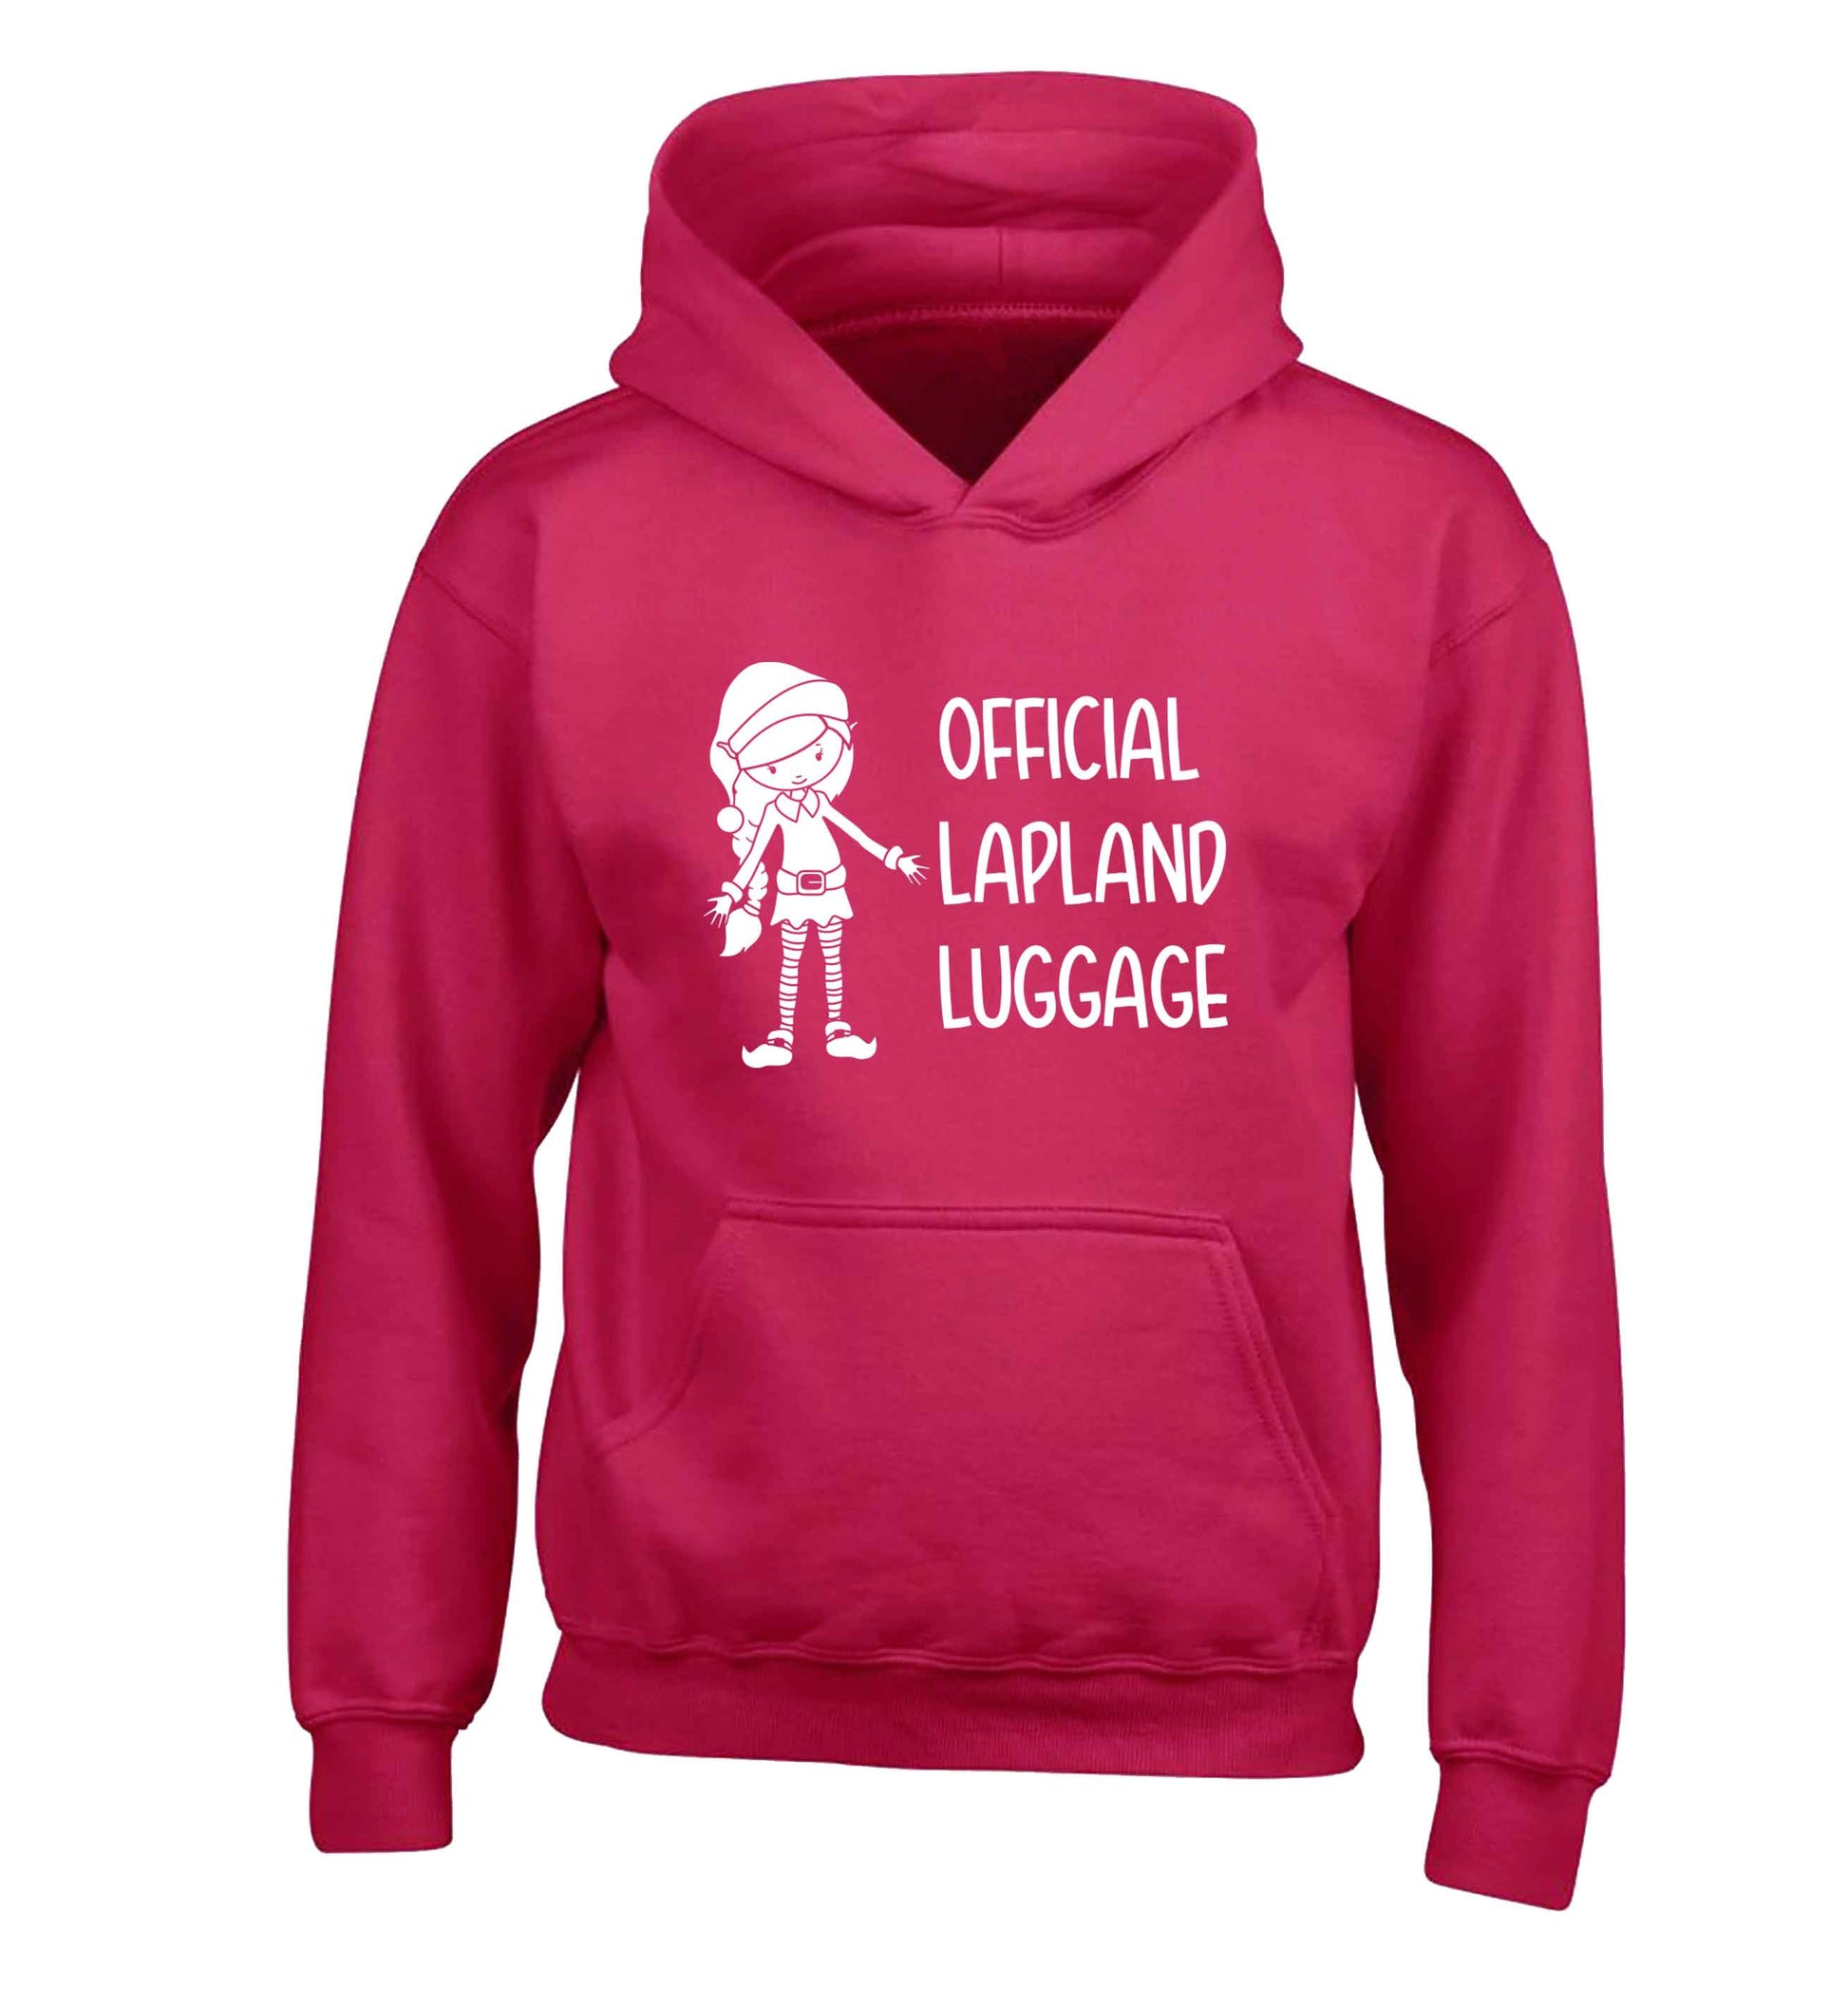 Official lapland luggage - Elf snowflake children's pink hoodie 12-13 Years